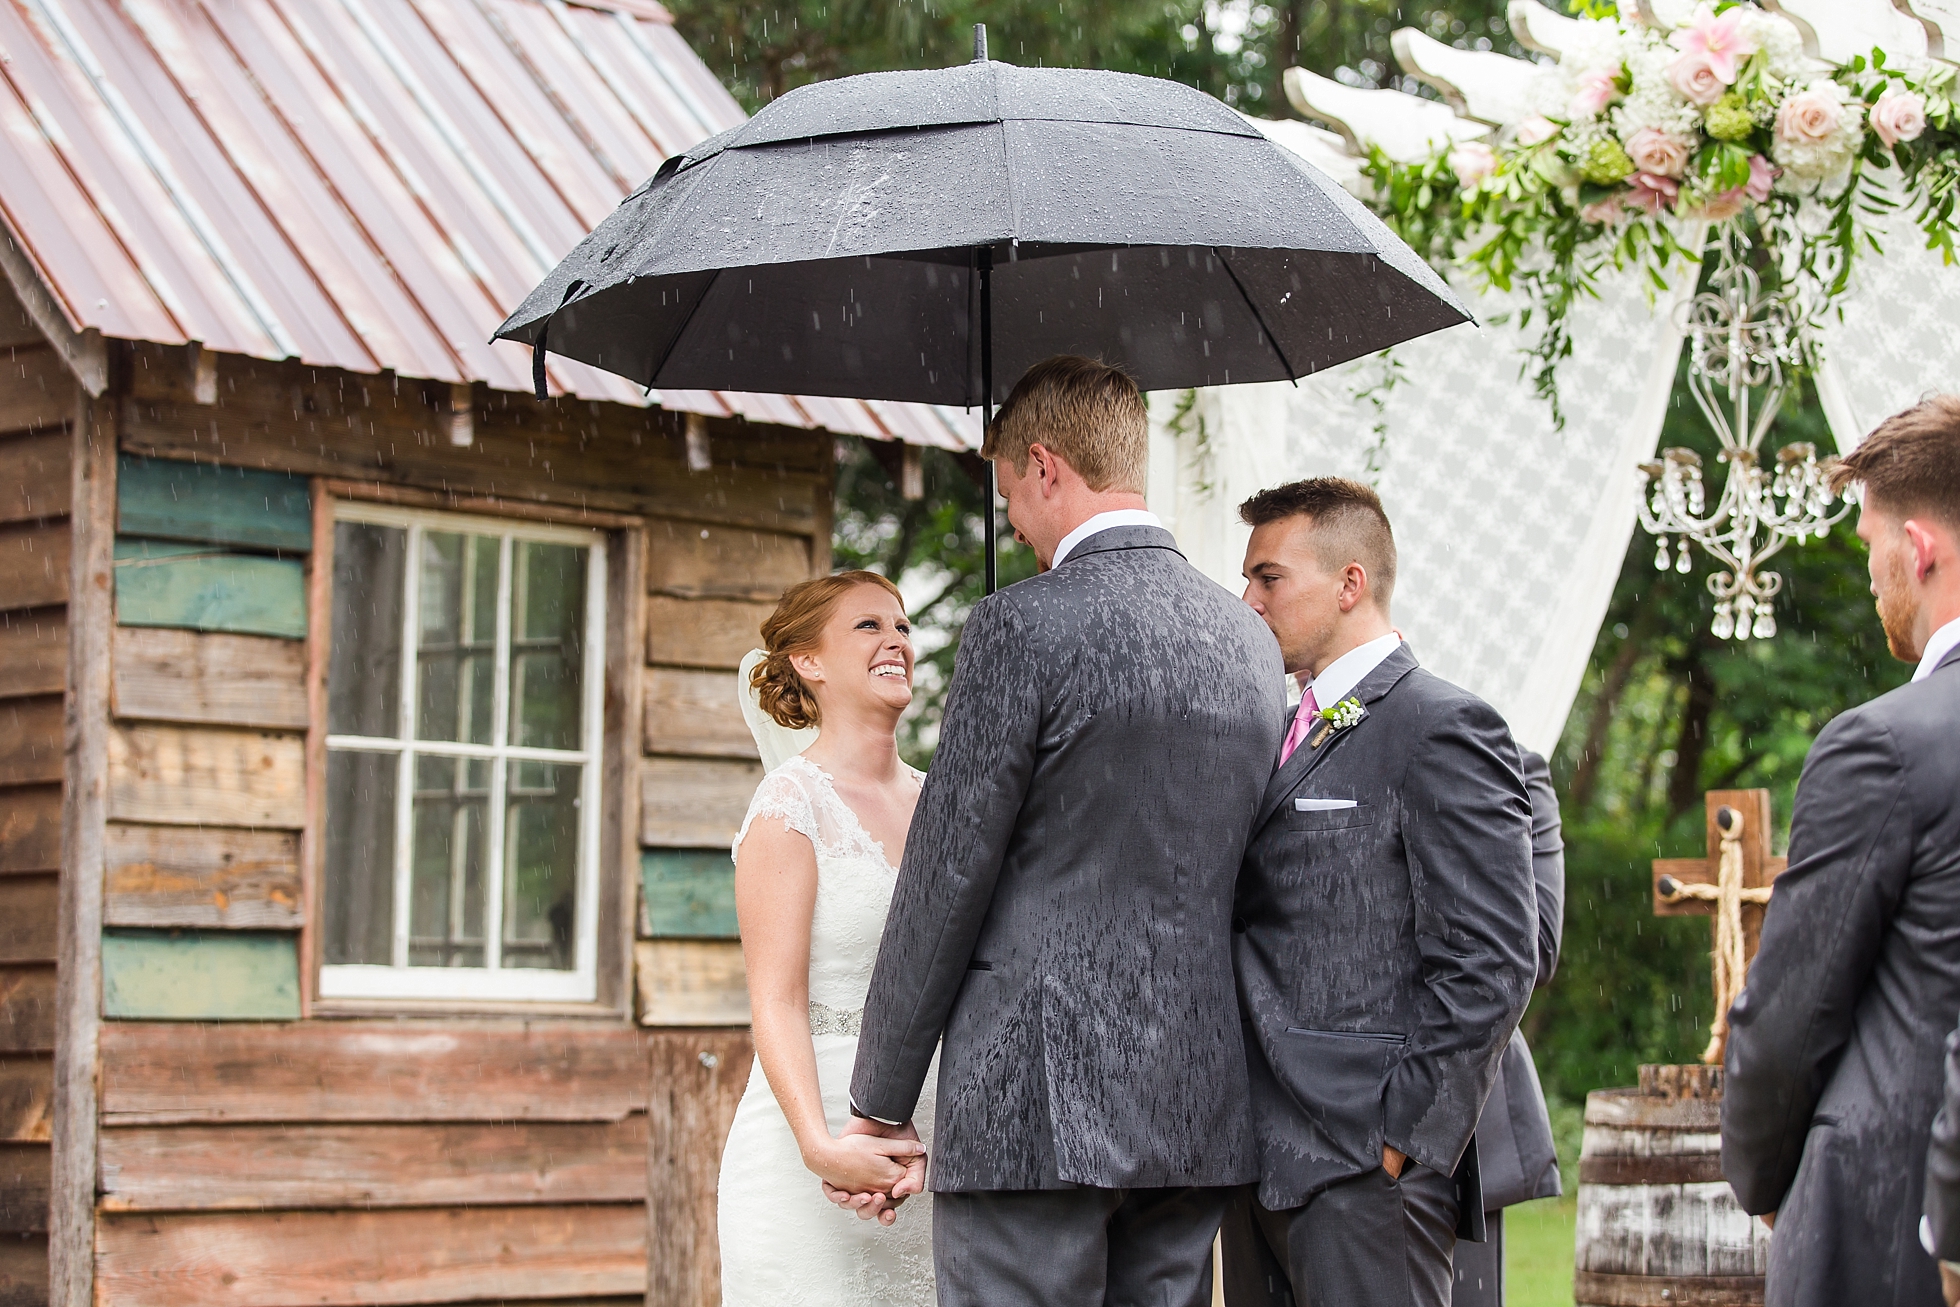 rainy wedding ceremony outdoor umbrellas